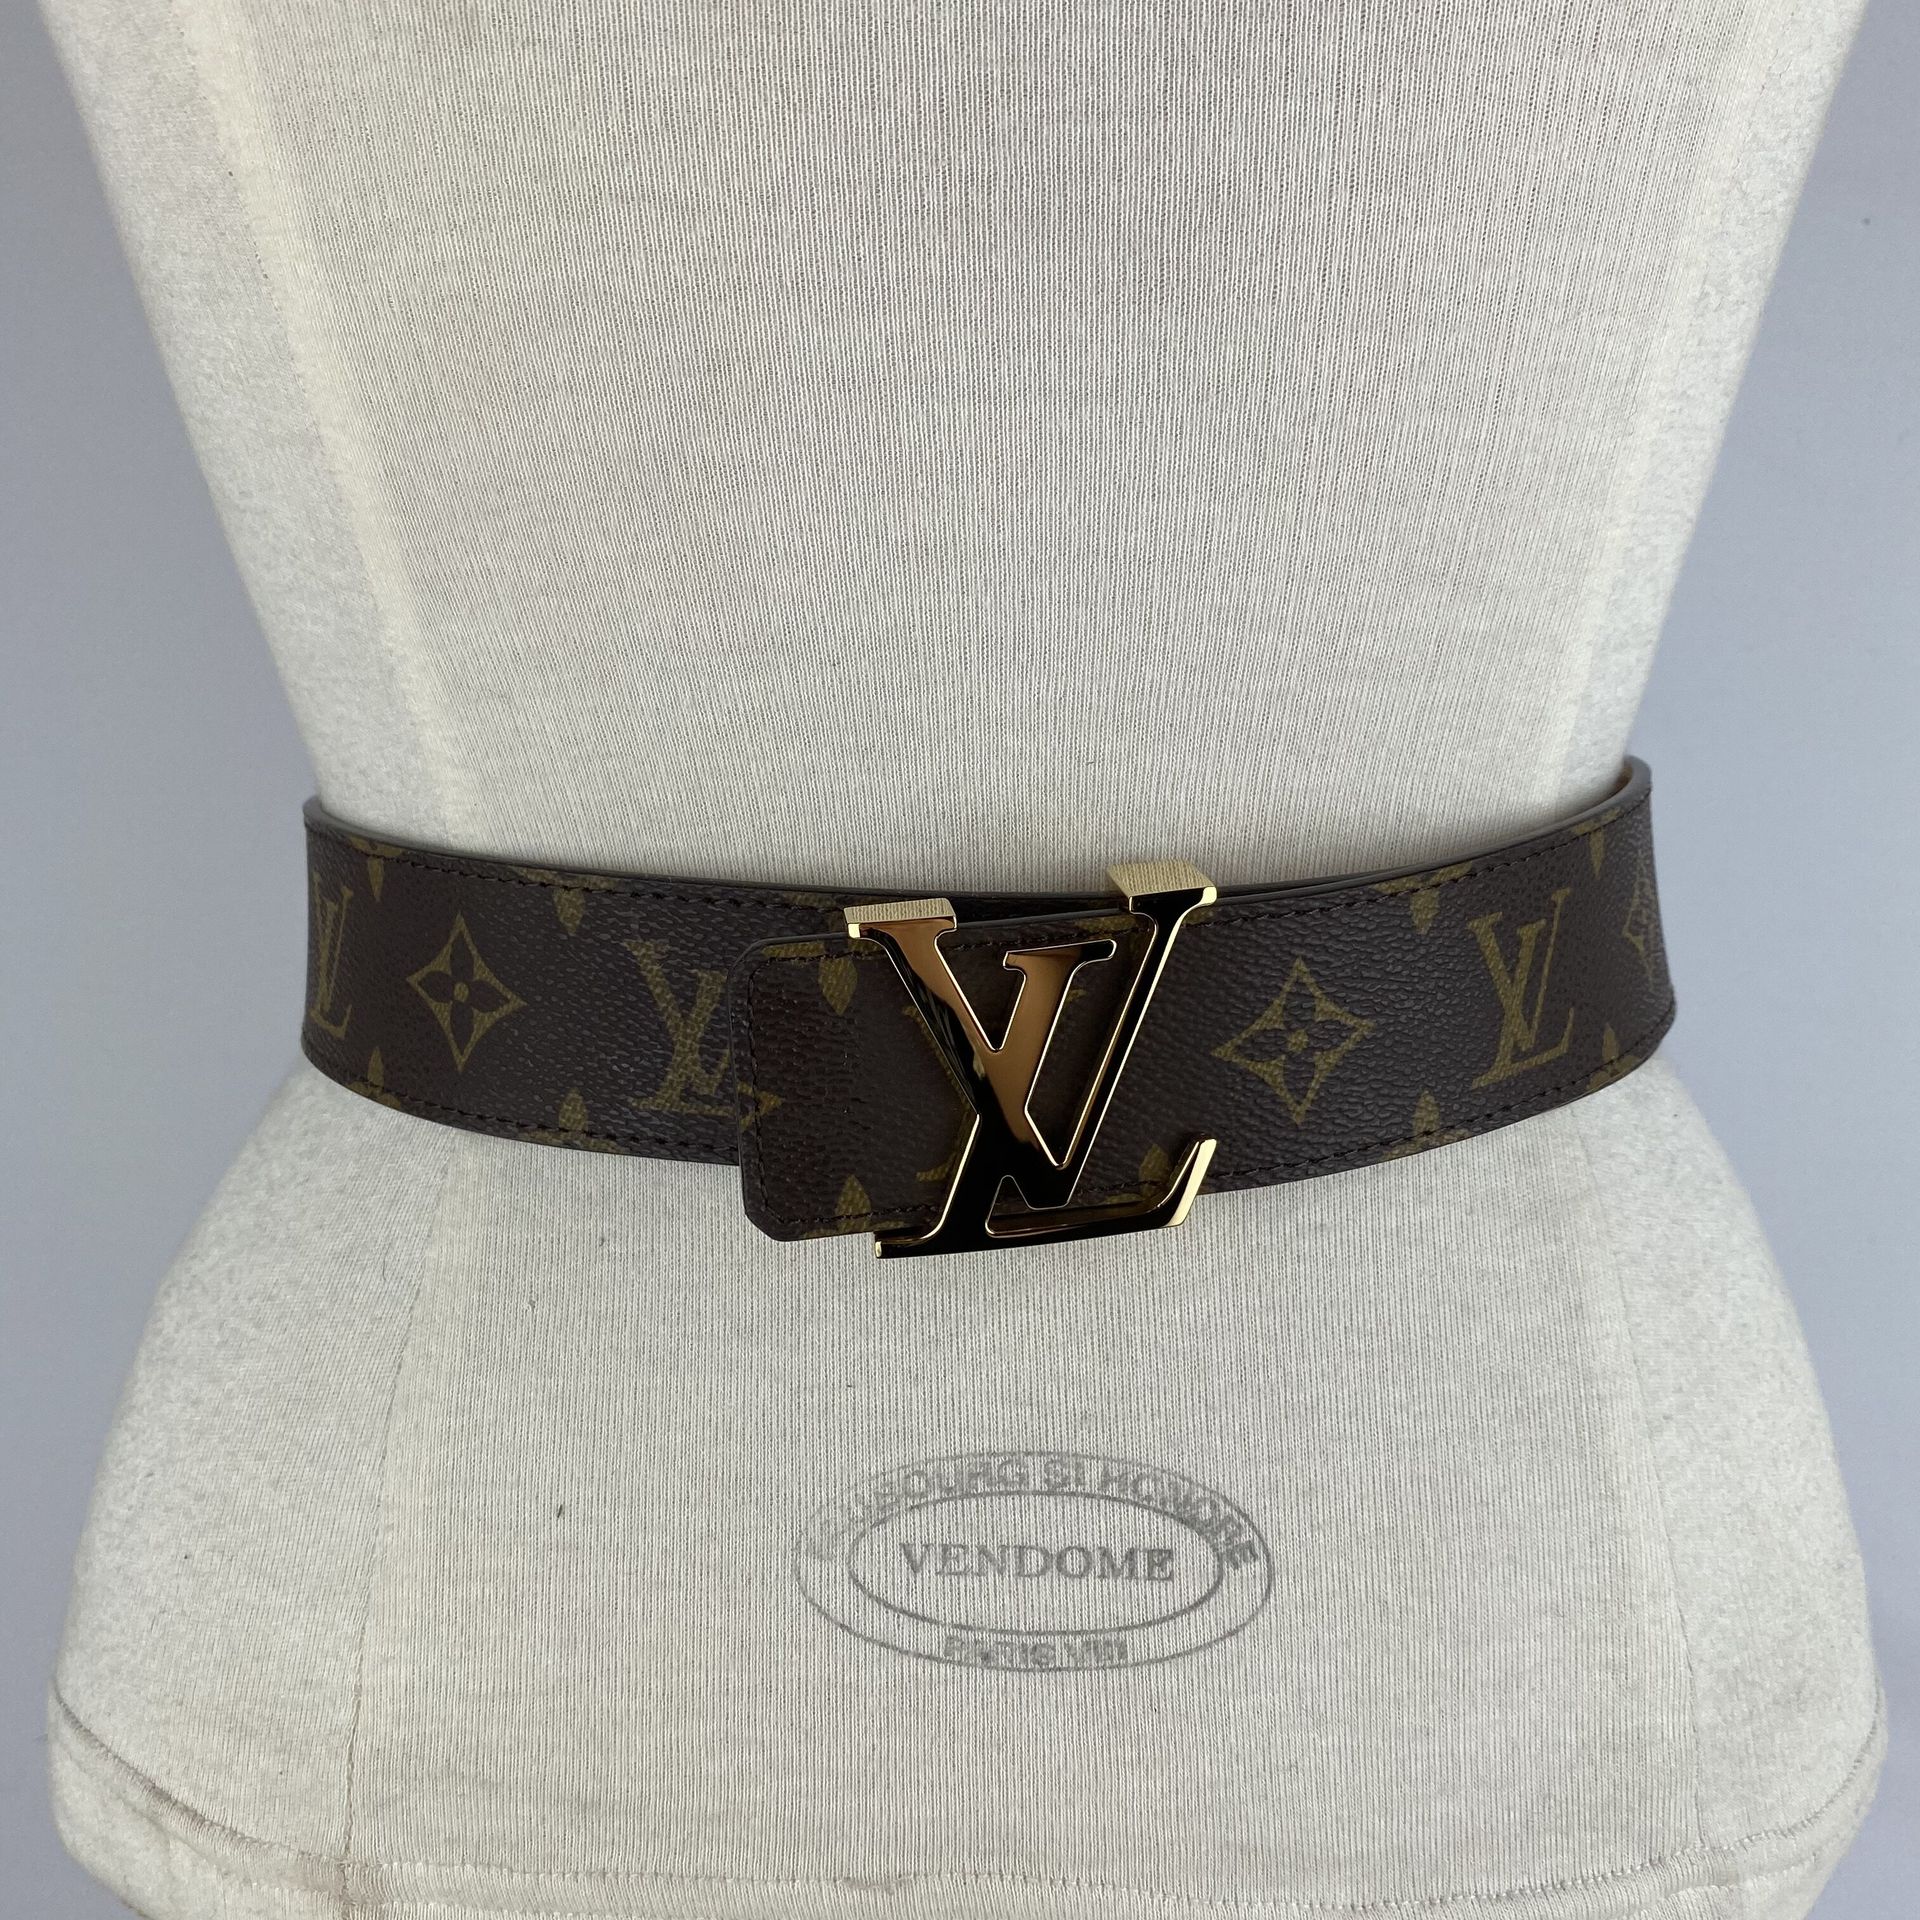 LOUIS VUITTON belt, leather and monogram canvas, size 90…